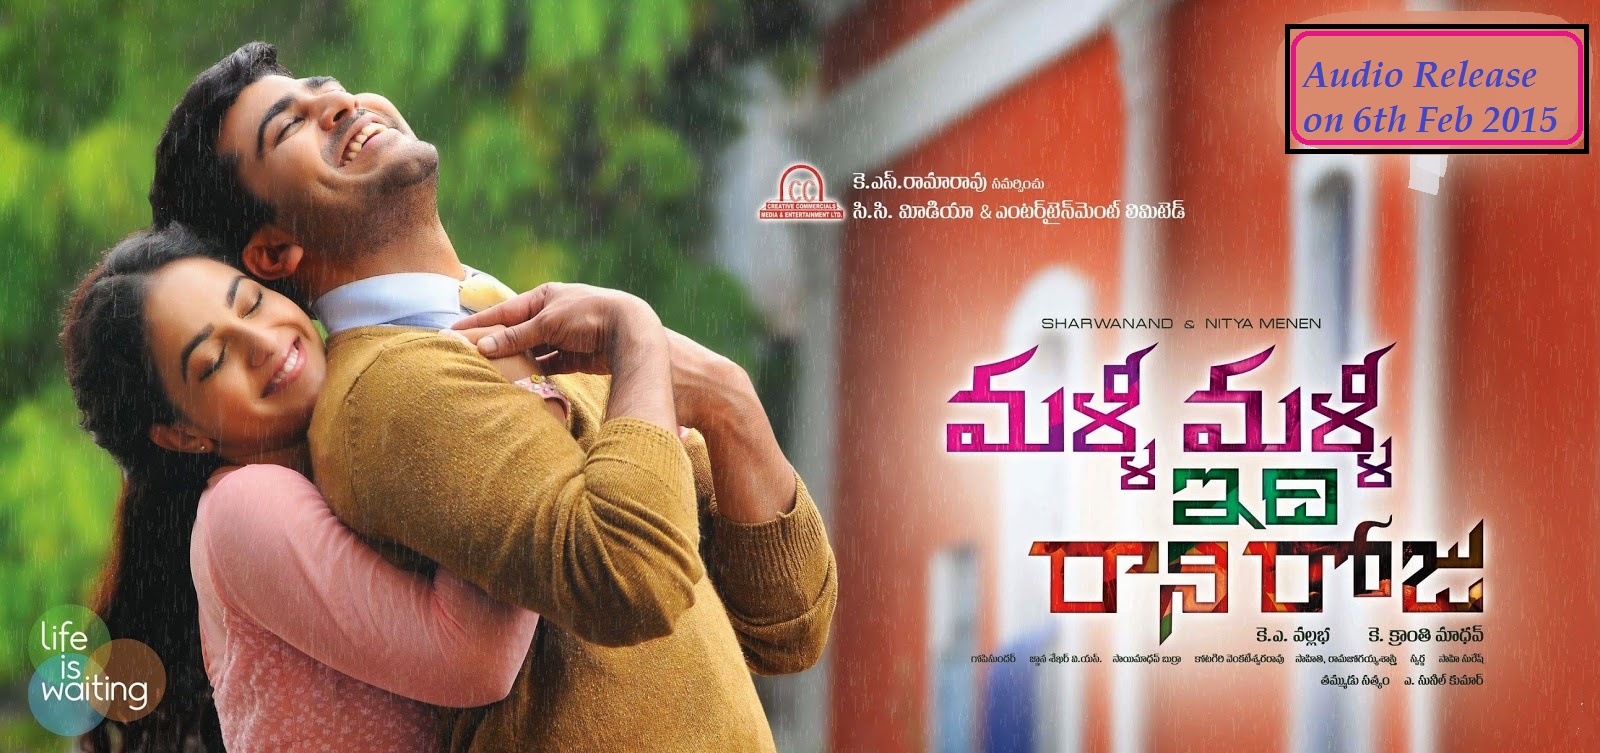 Malli Malli Idi Rani Rojui Telugu Movie Review and Rating - Sharwanand,Nithya Menen